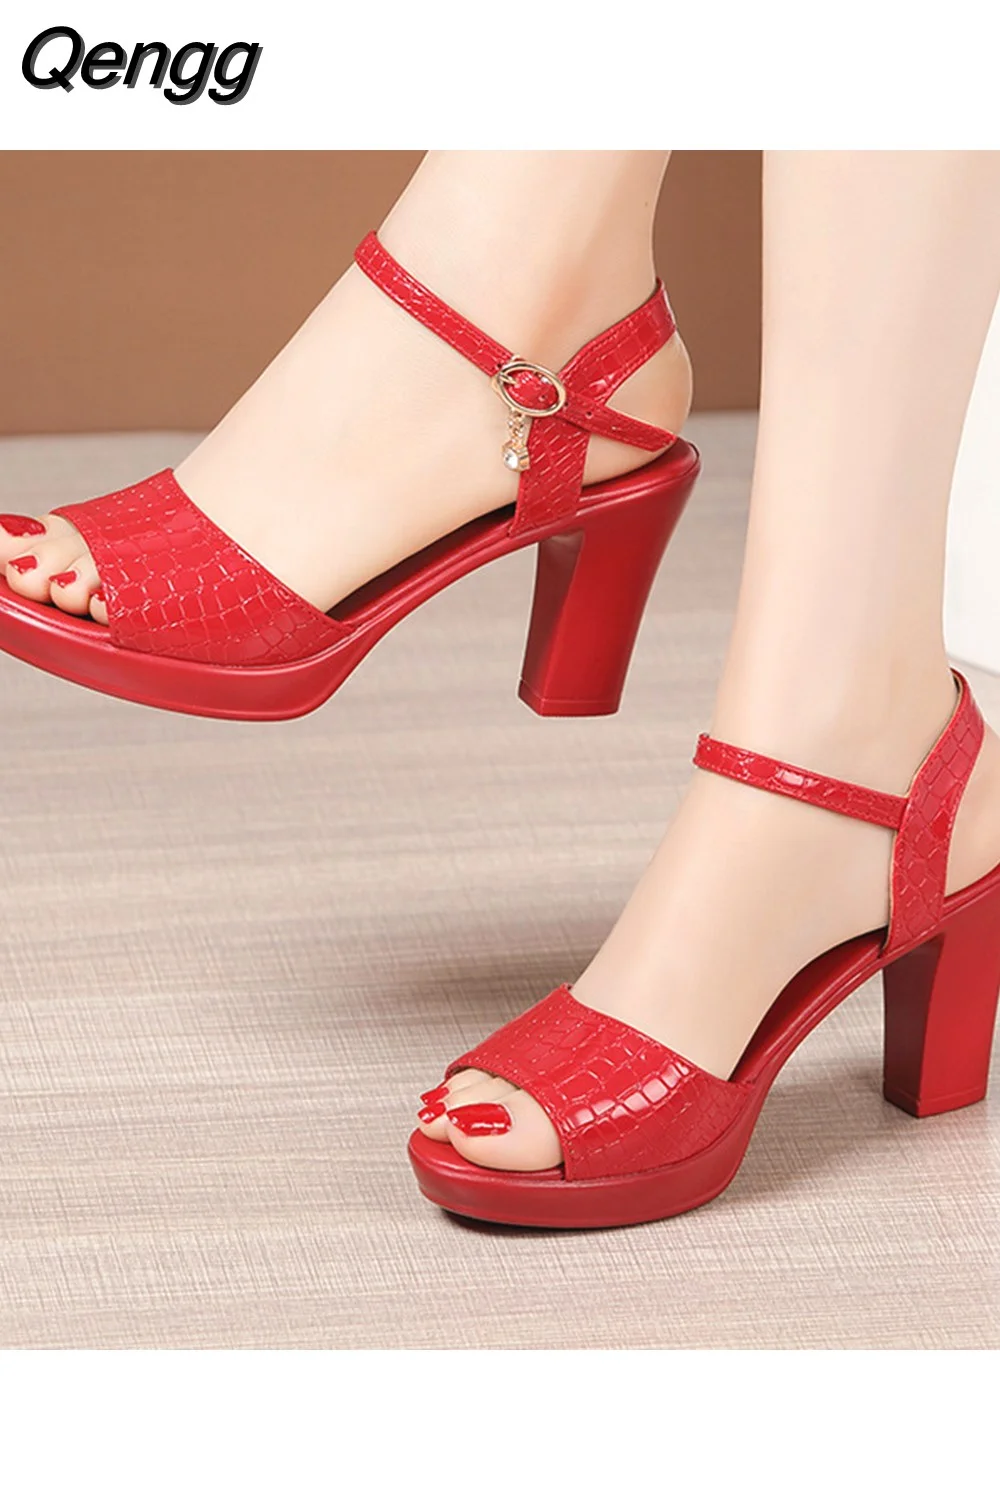 Qengg Summer Platform Sandals Women Ladies Party Shoes Sandals Female Wedge High Heels Fashion Peep Toe Sandals Large Size 32-43